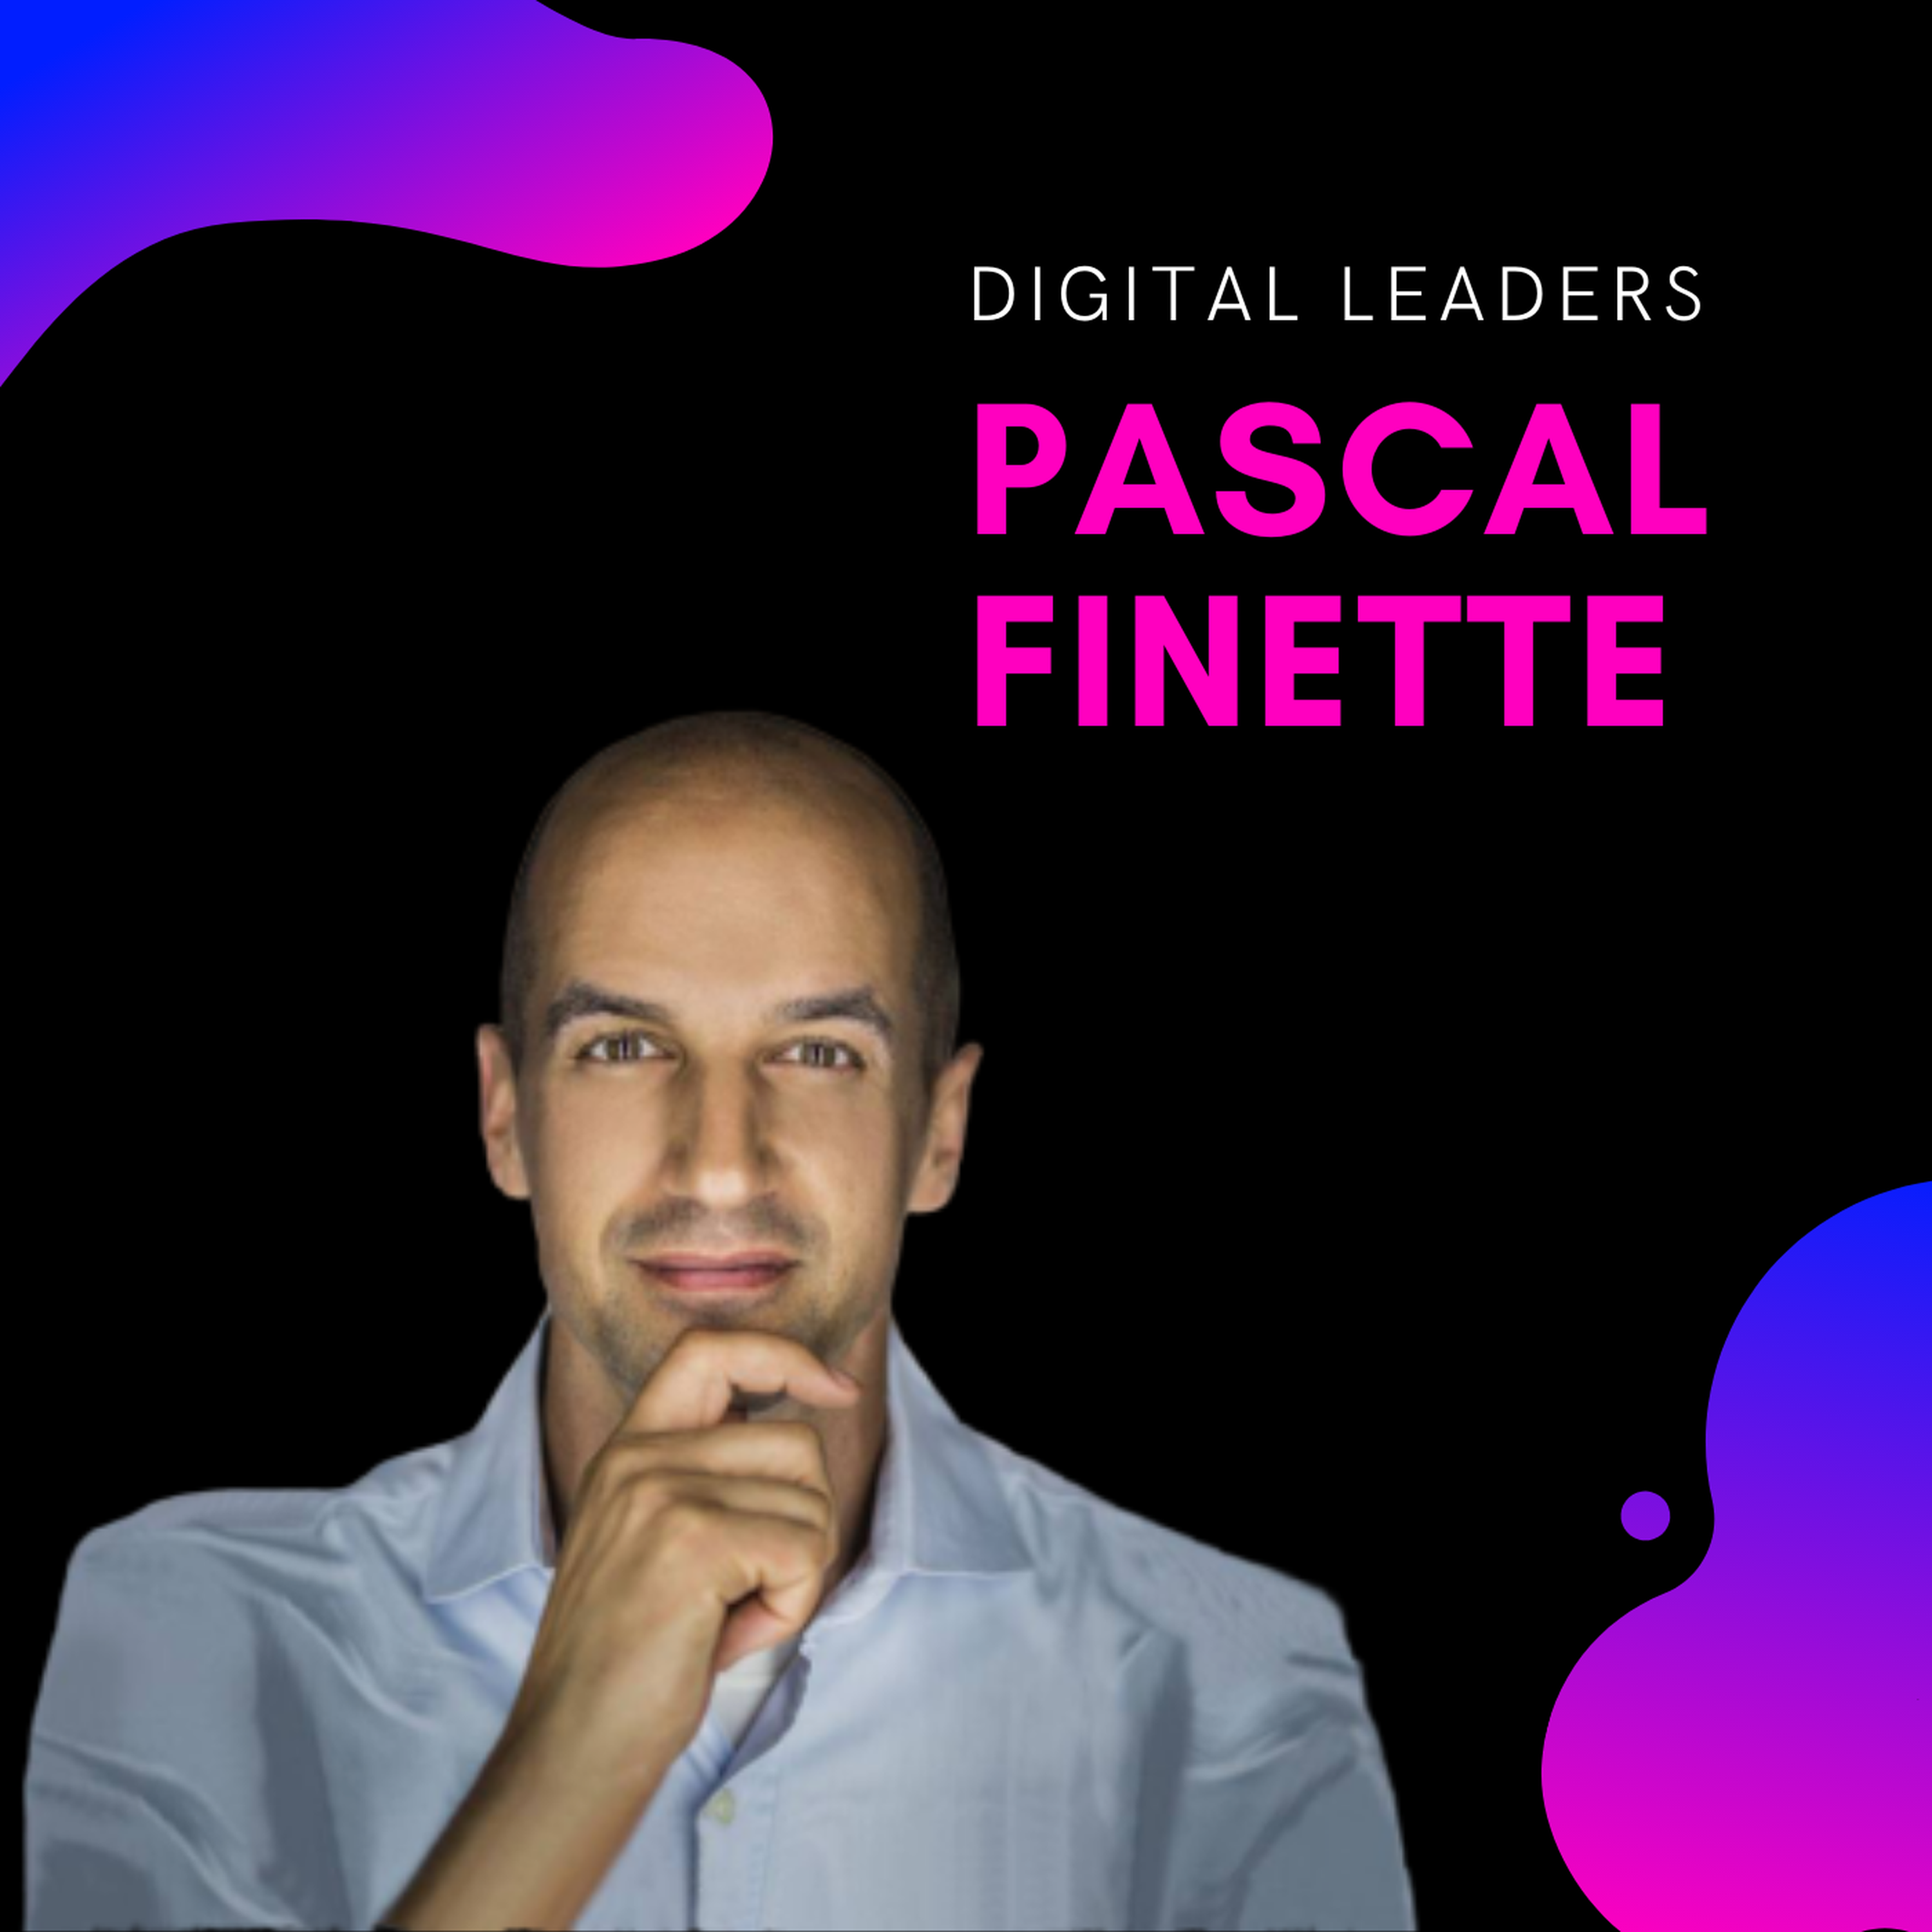 Pascal Finette, be.radical & Singularity University | Digital Leaders Image